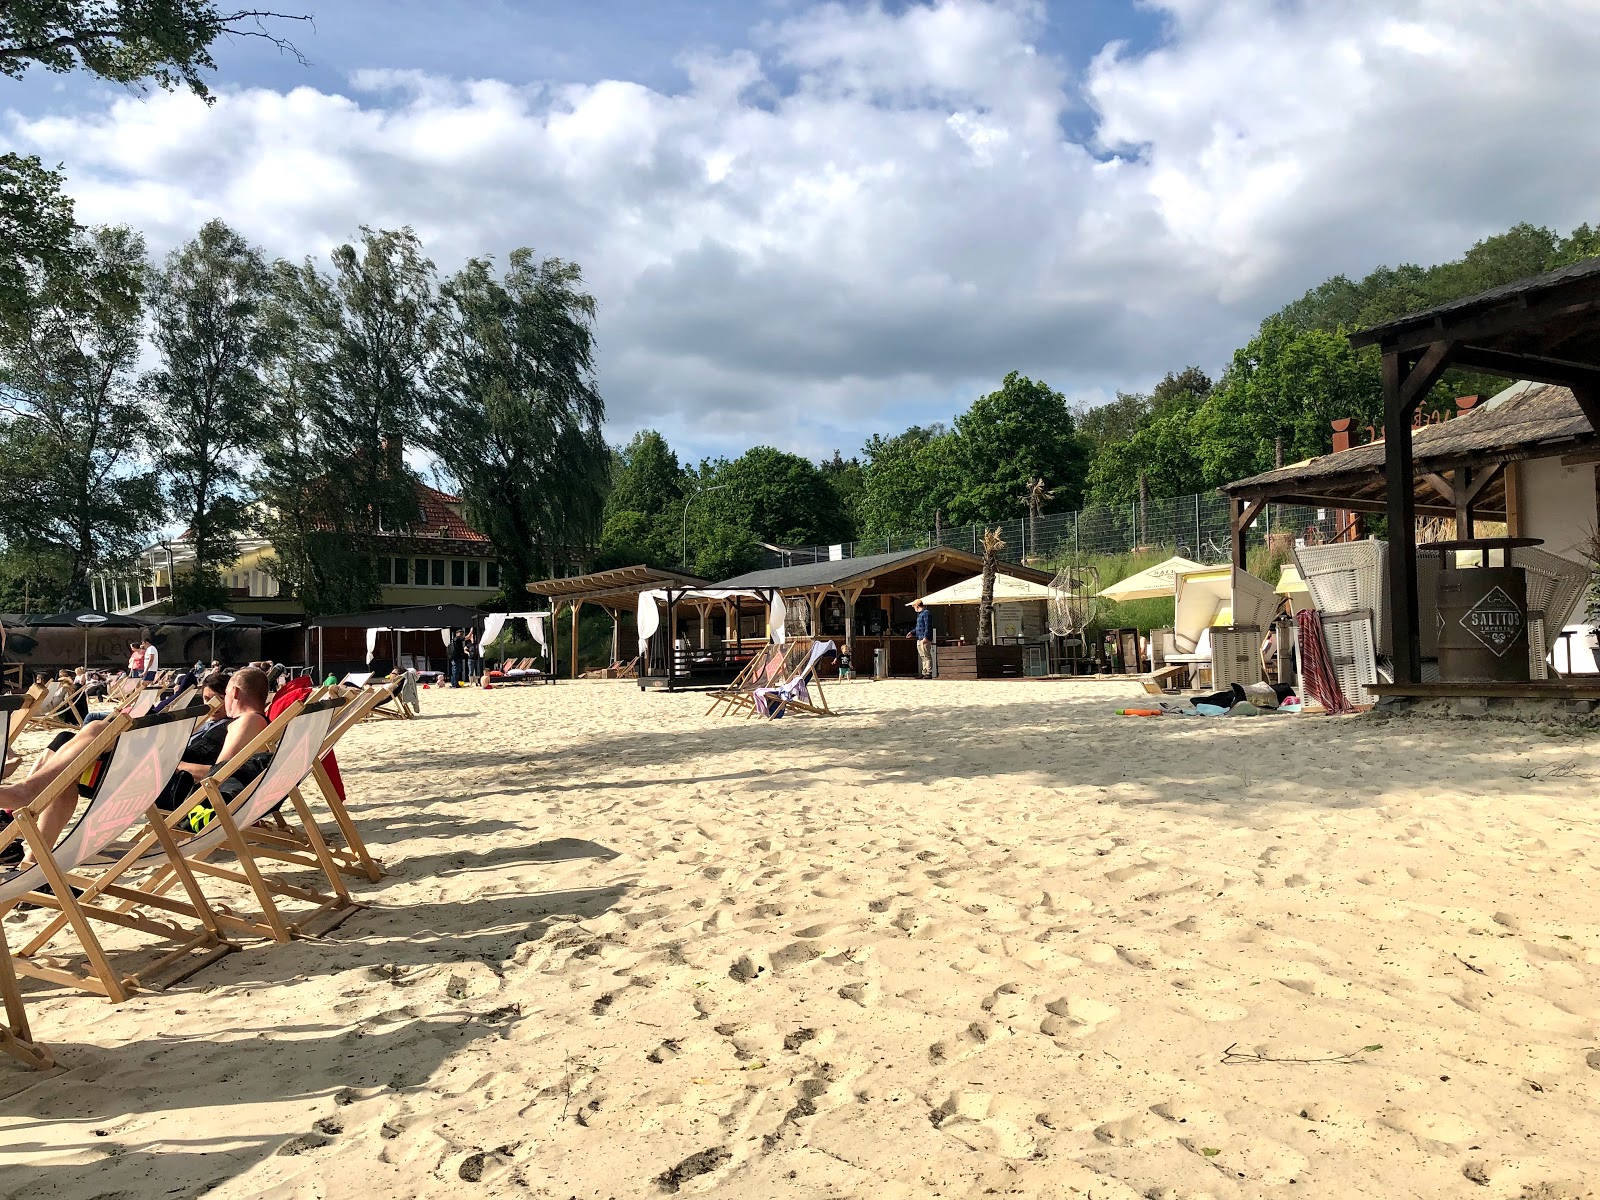 Photo of Uferlos Mohnesee beach resort area